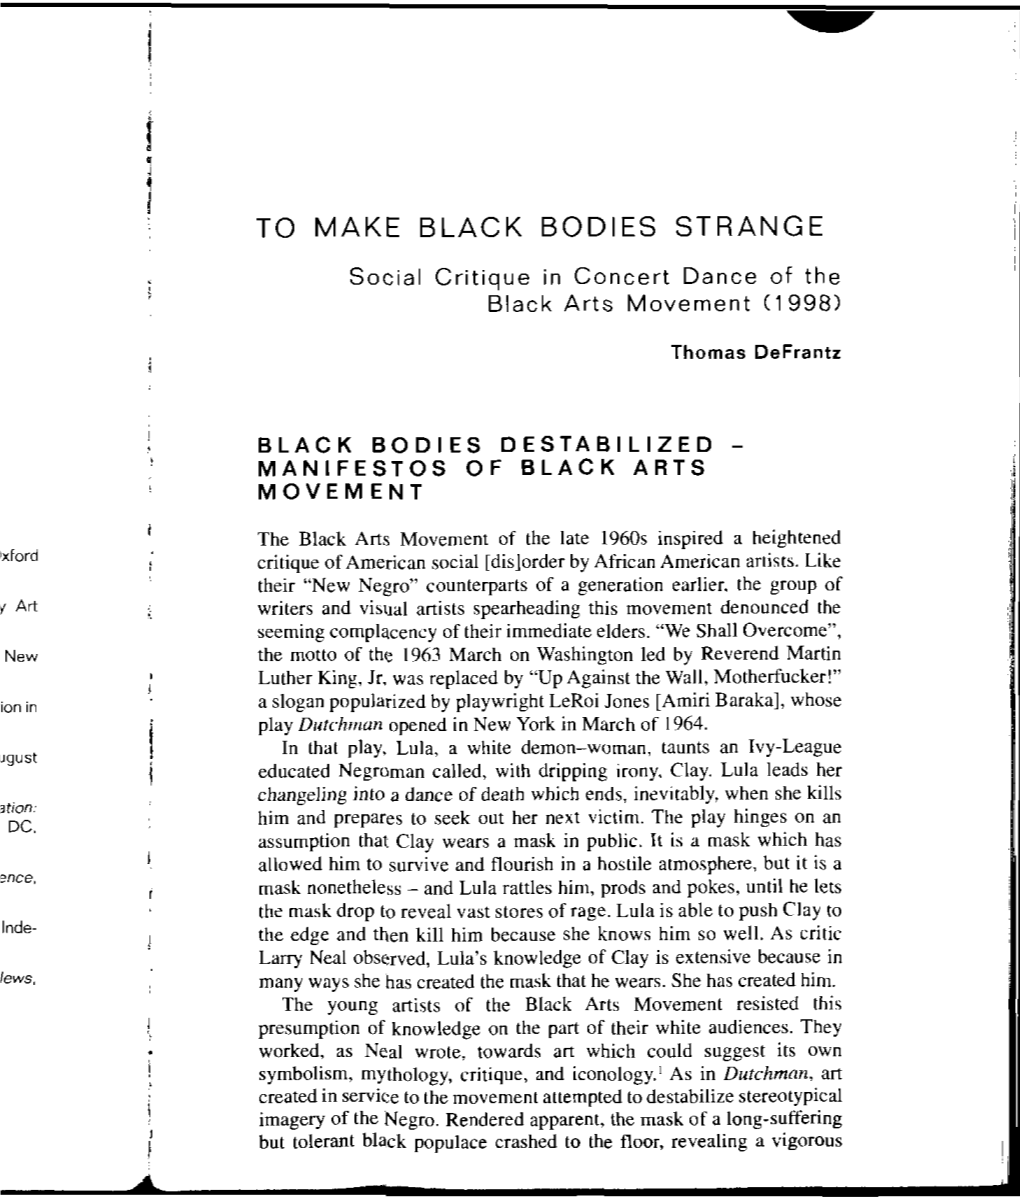 To Make Black Bodies Strange, Social Critique In